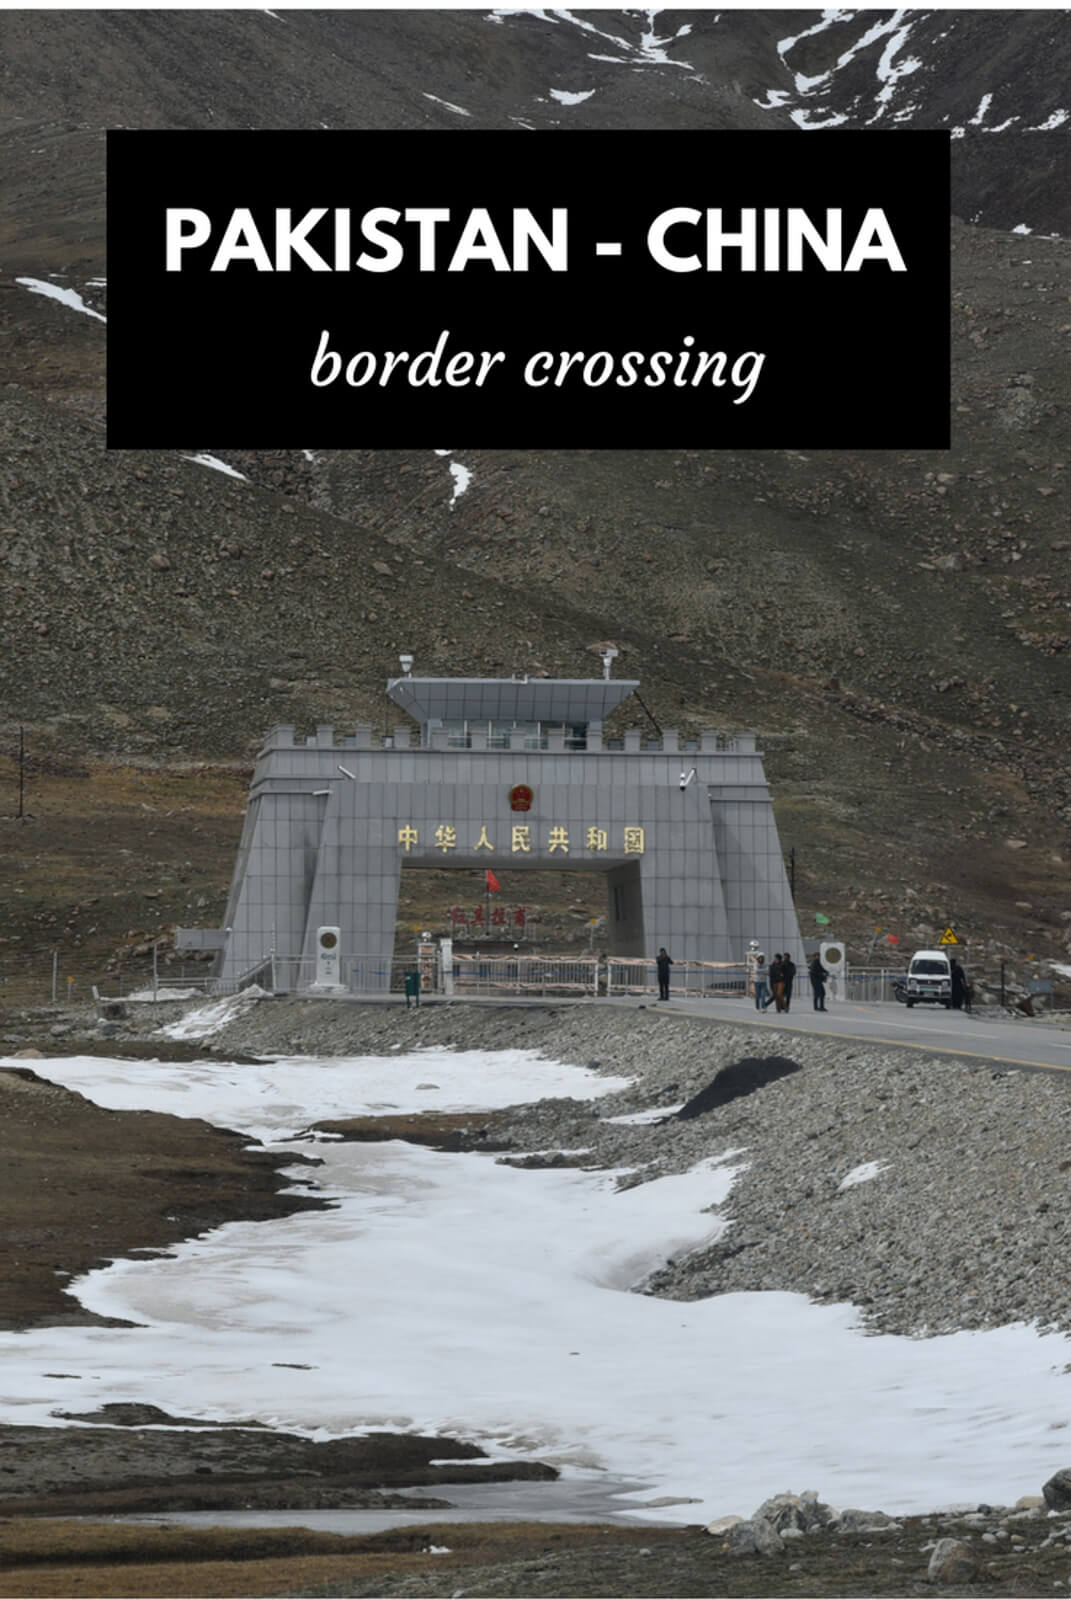 Pakistan China border crossing - Khunjerab Pass (1)